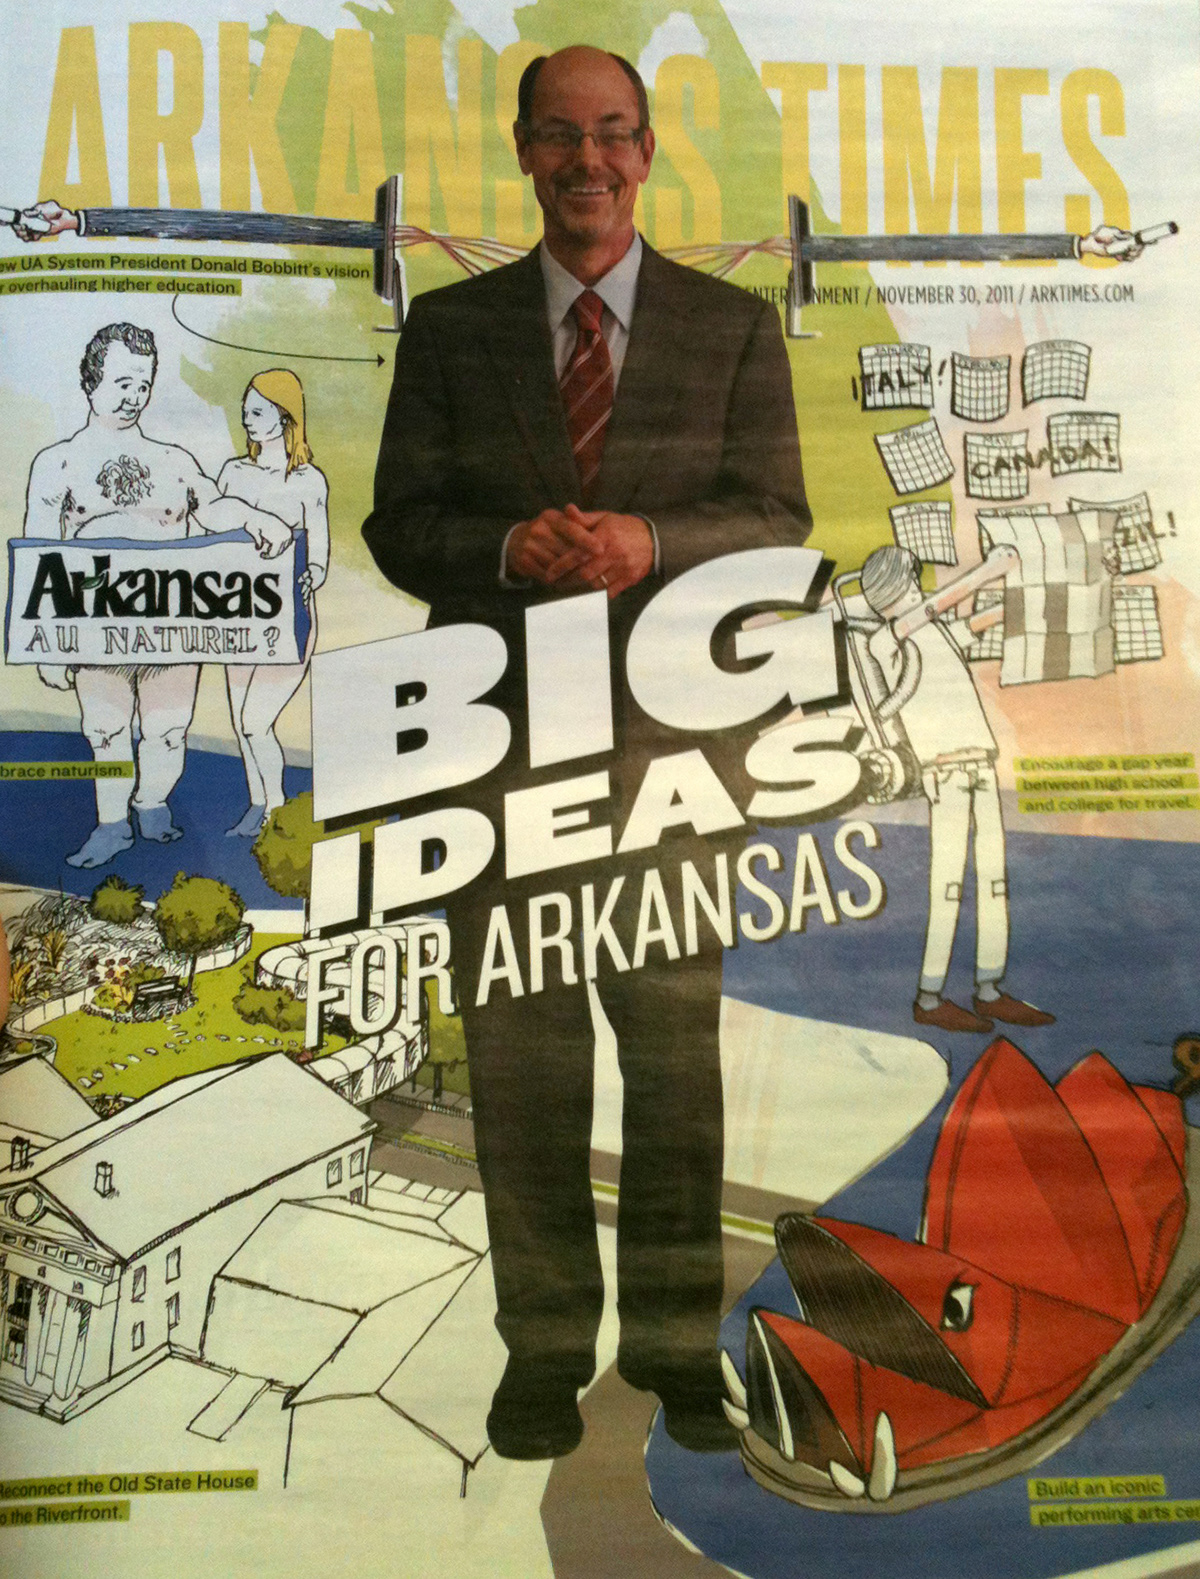 Arkansas little rock Arkansas Times editorial